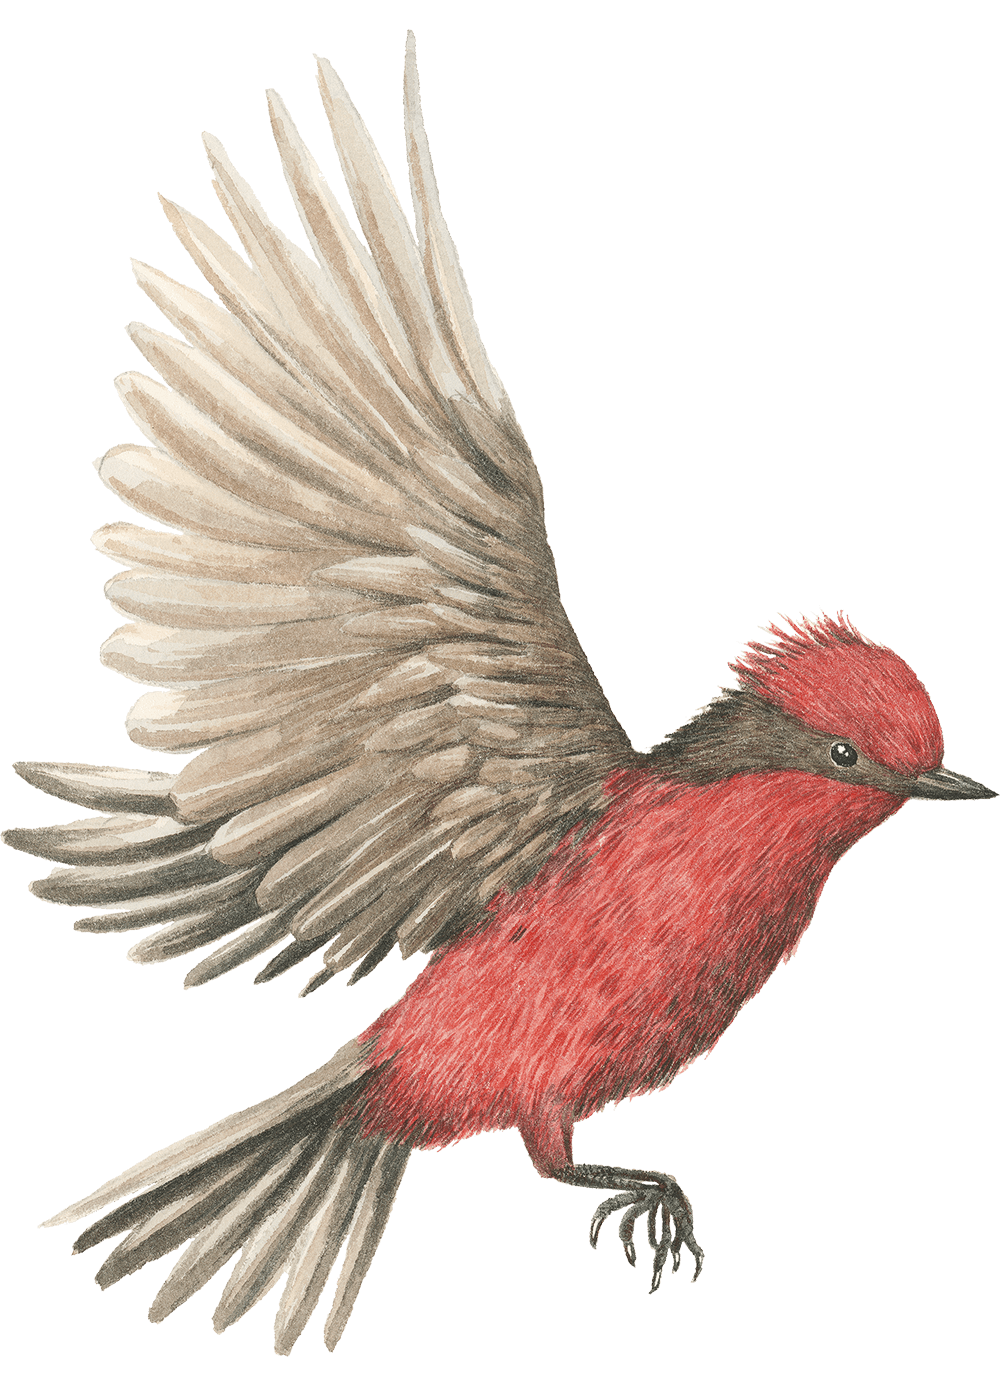 An illustration of a Vermillion flycatcher